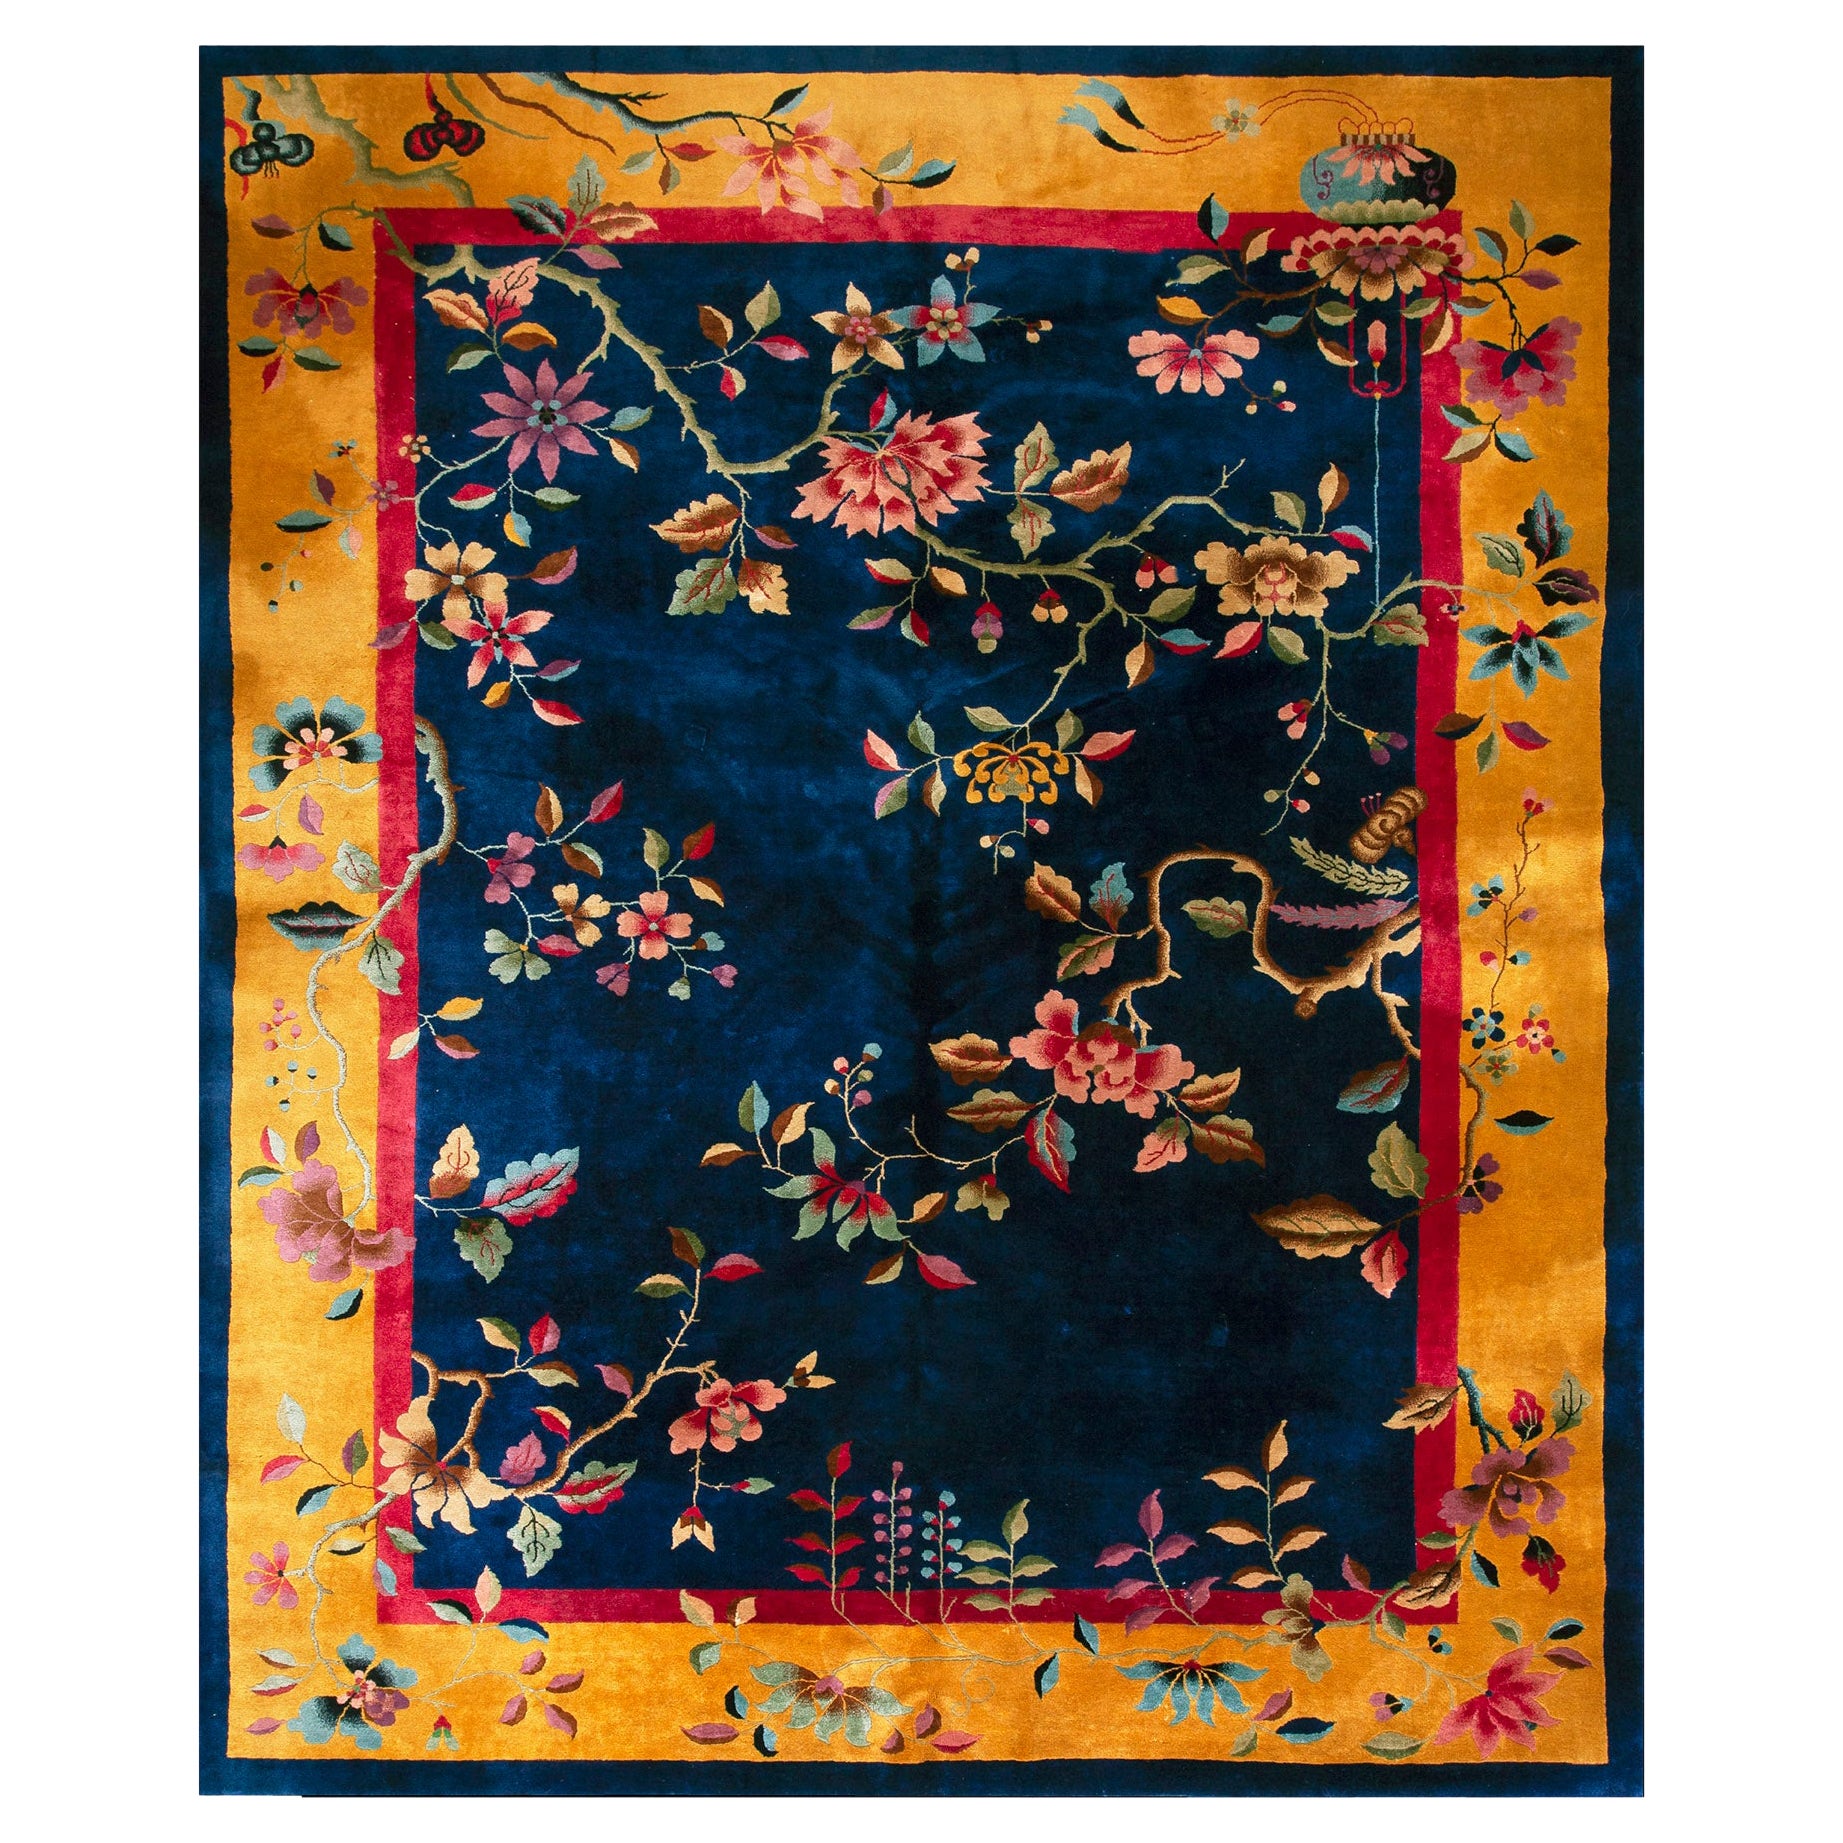 1920s Chinese Art Deco Carpet by Nichols Workshop ( 8'10" x 11'4" - 270 x 345 )